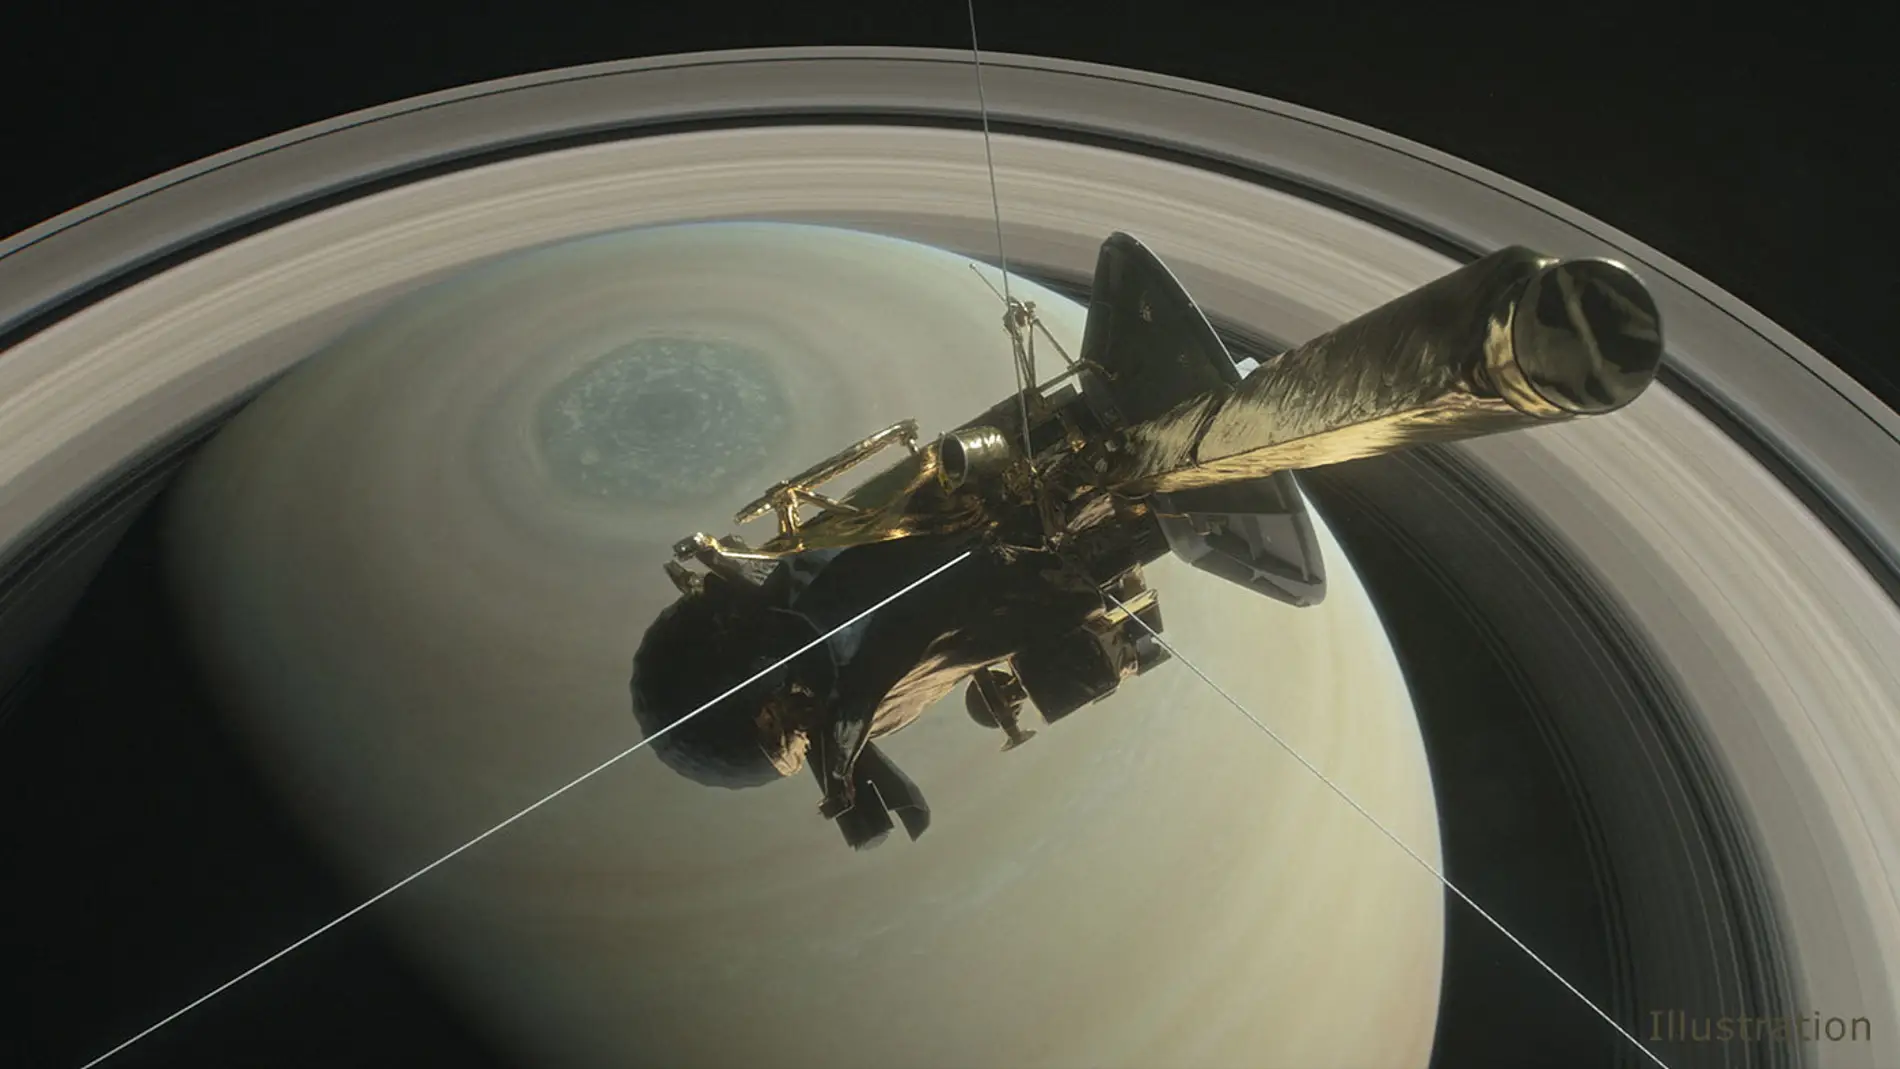 Final espectacular de la mision Cassini